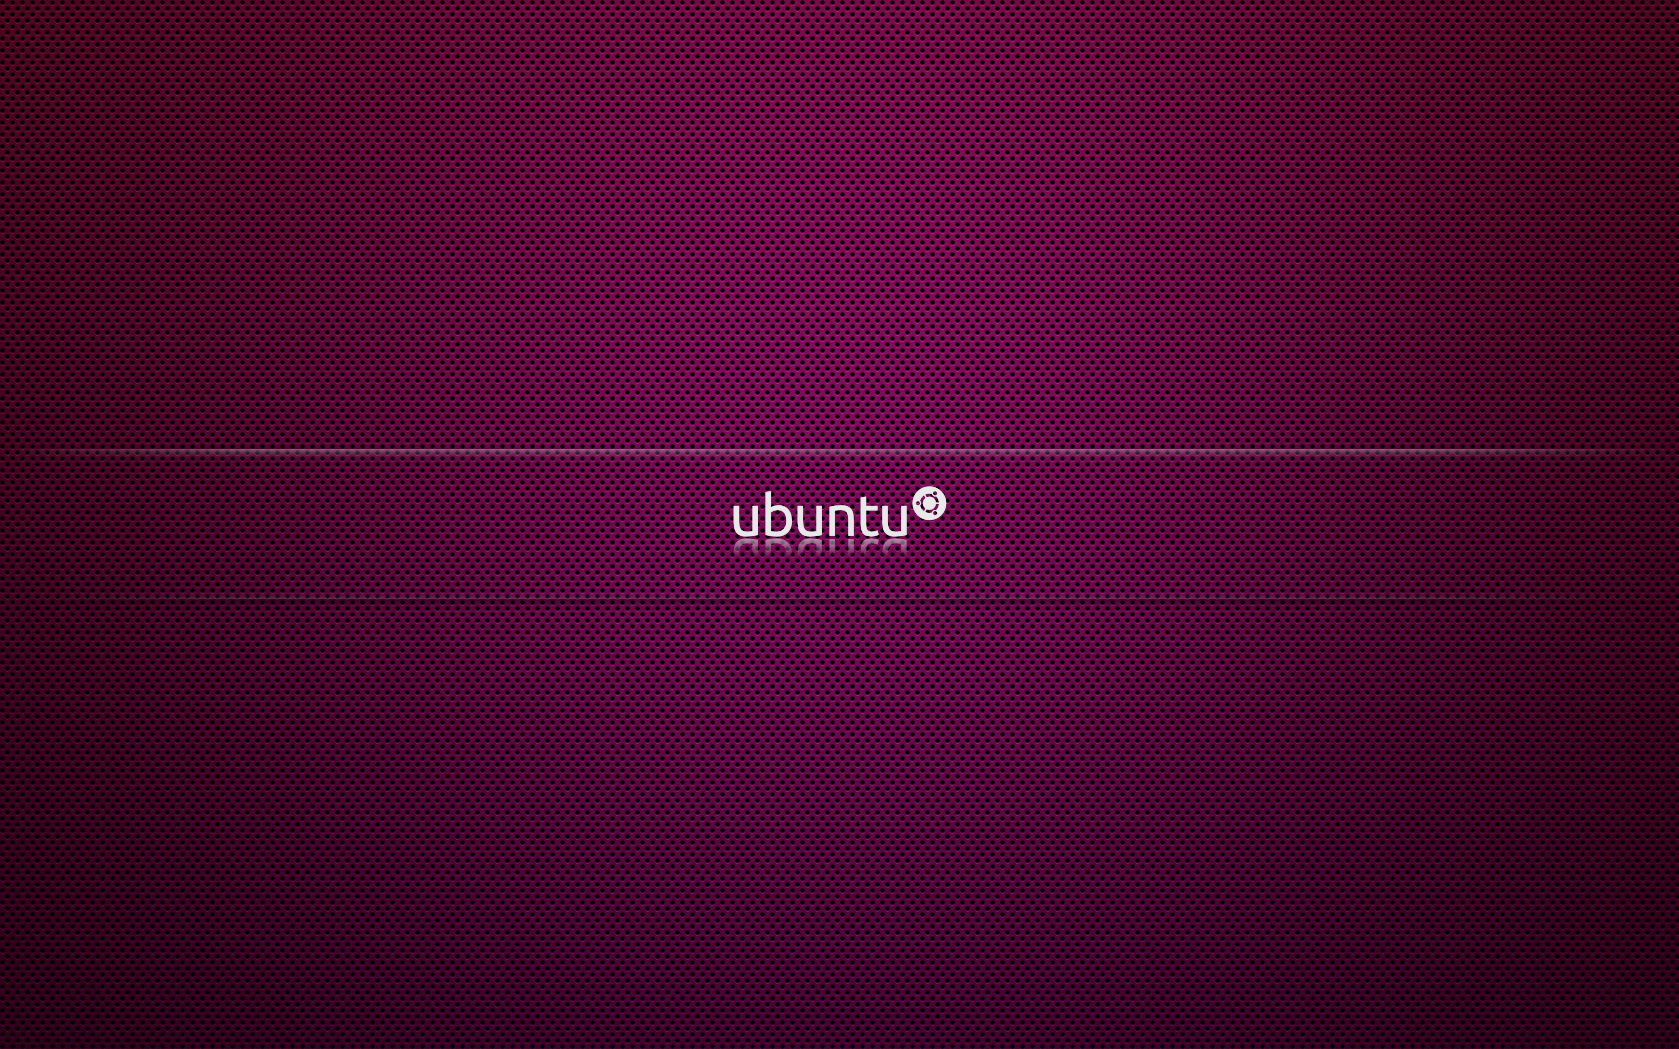 Ubuntu Mesh